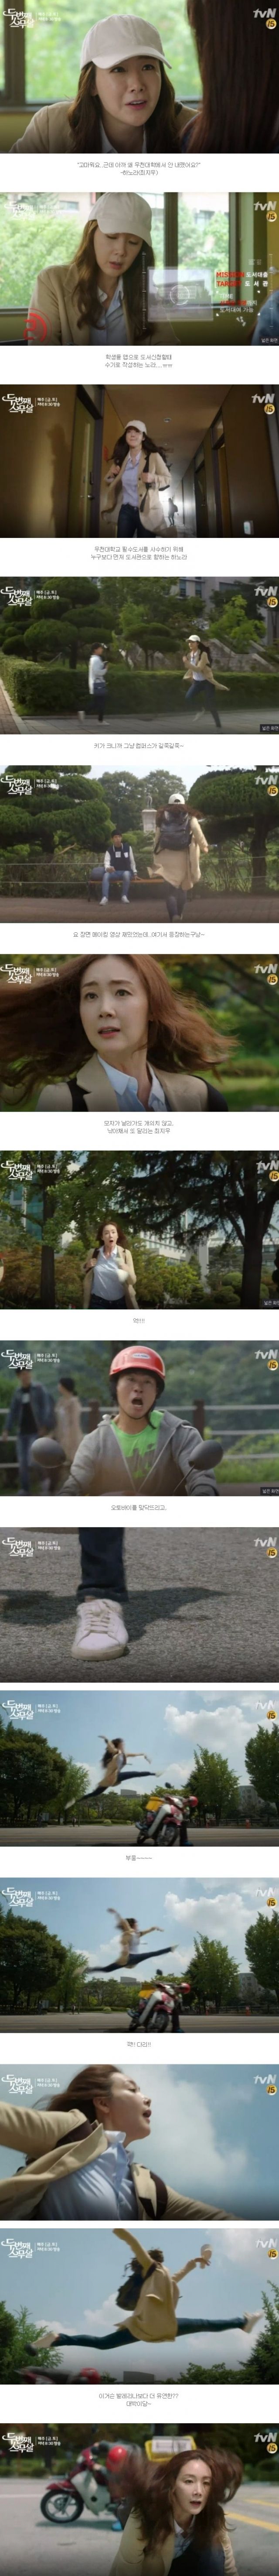 episodes 1 and 2 captures for the Korean drama 'Twenty Again'